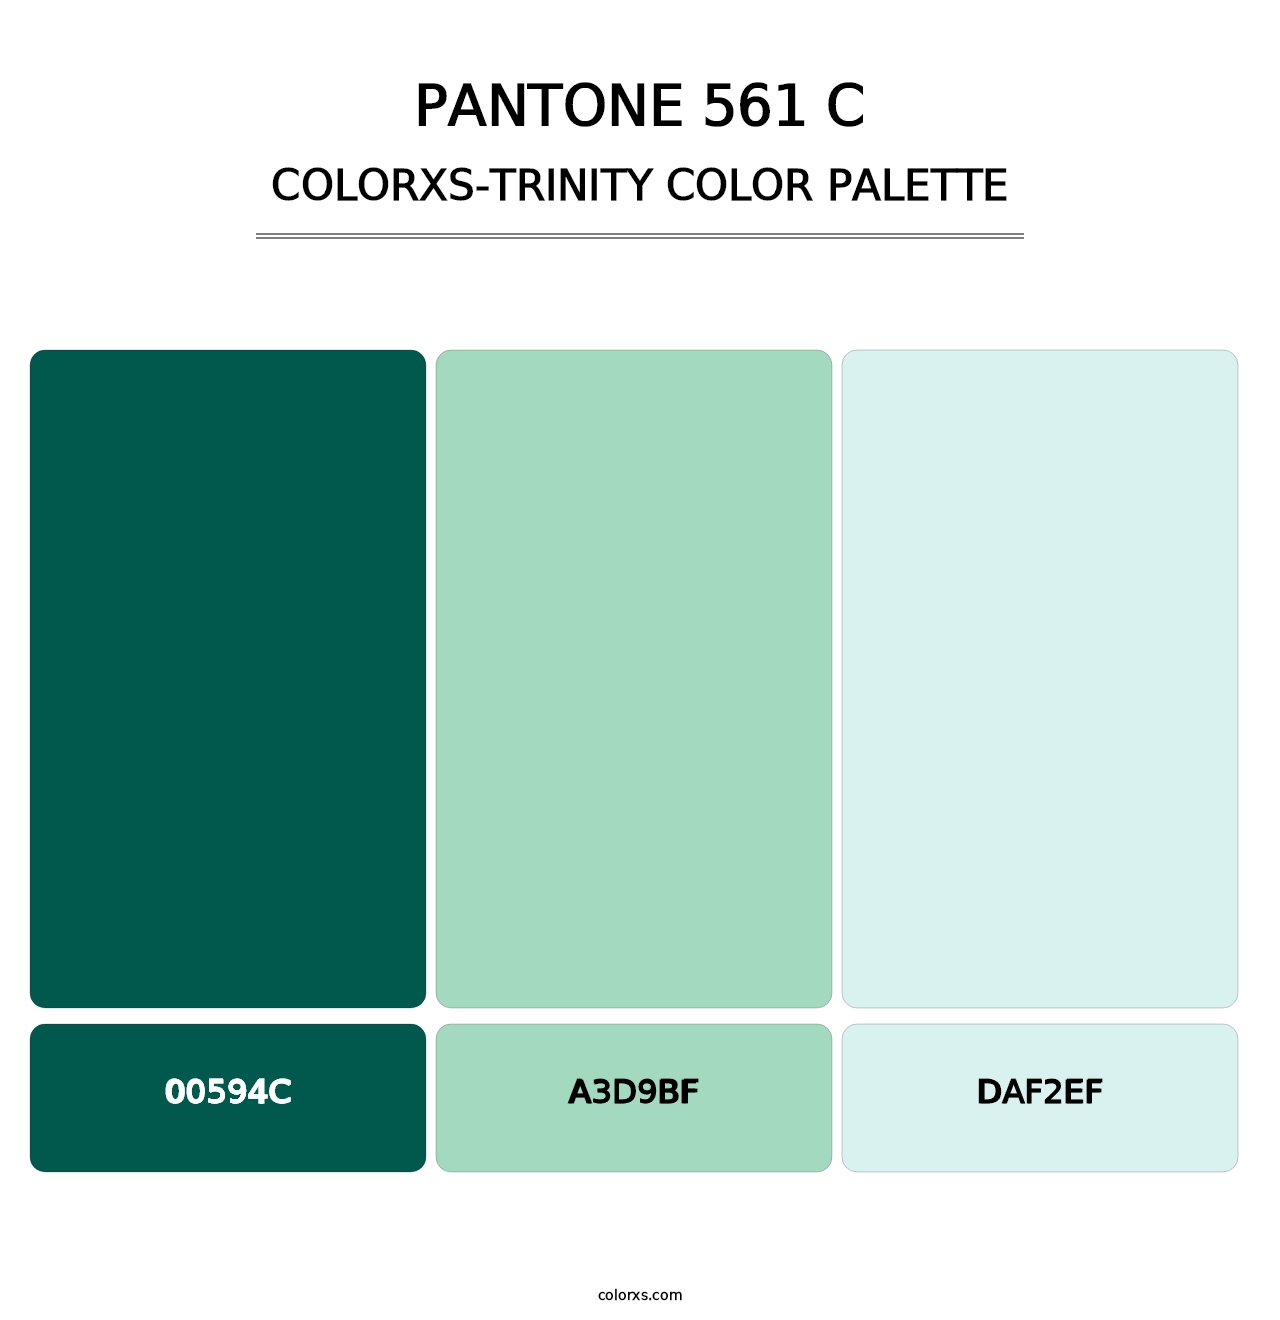 PANTONE 561 C - Colorxs Trinity Palette